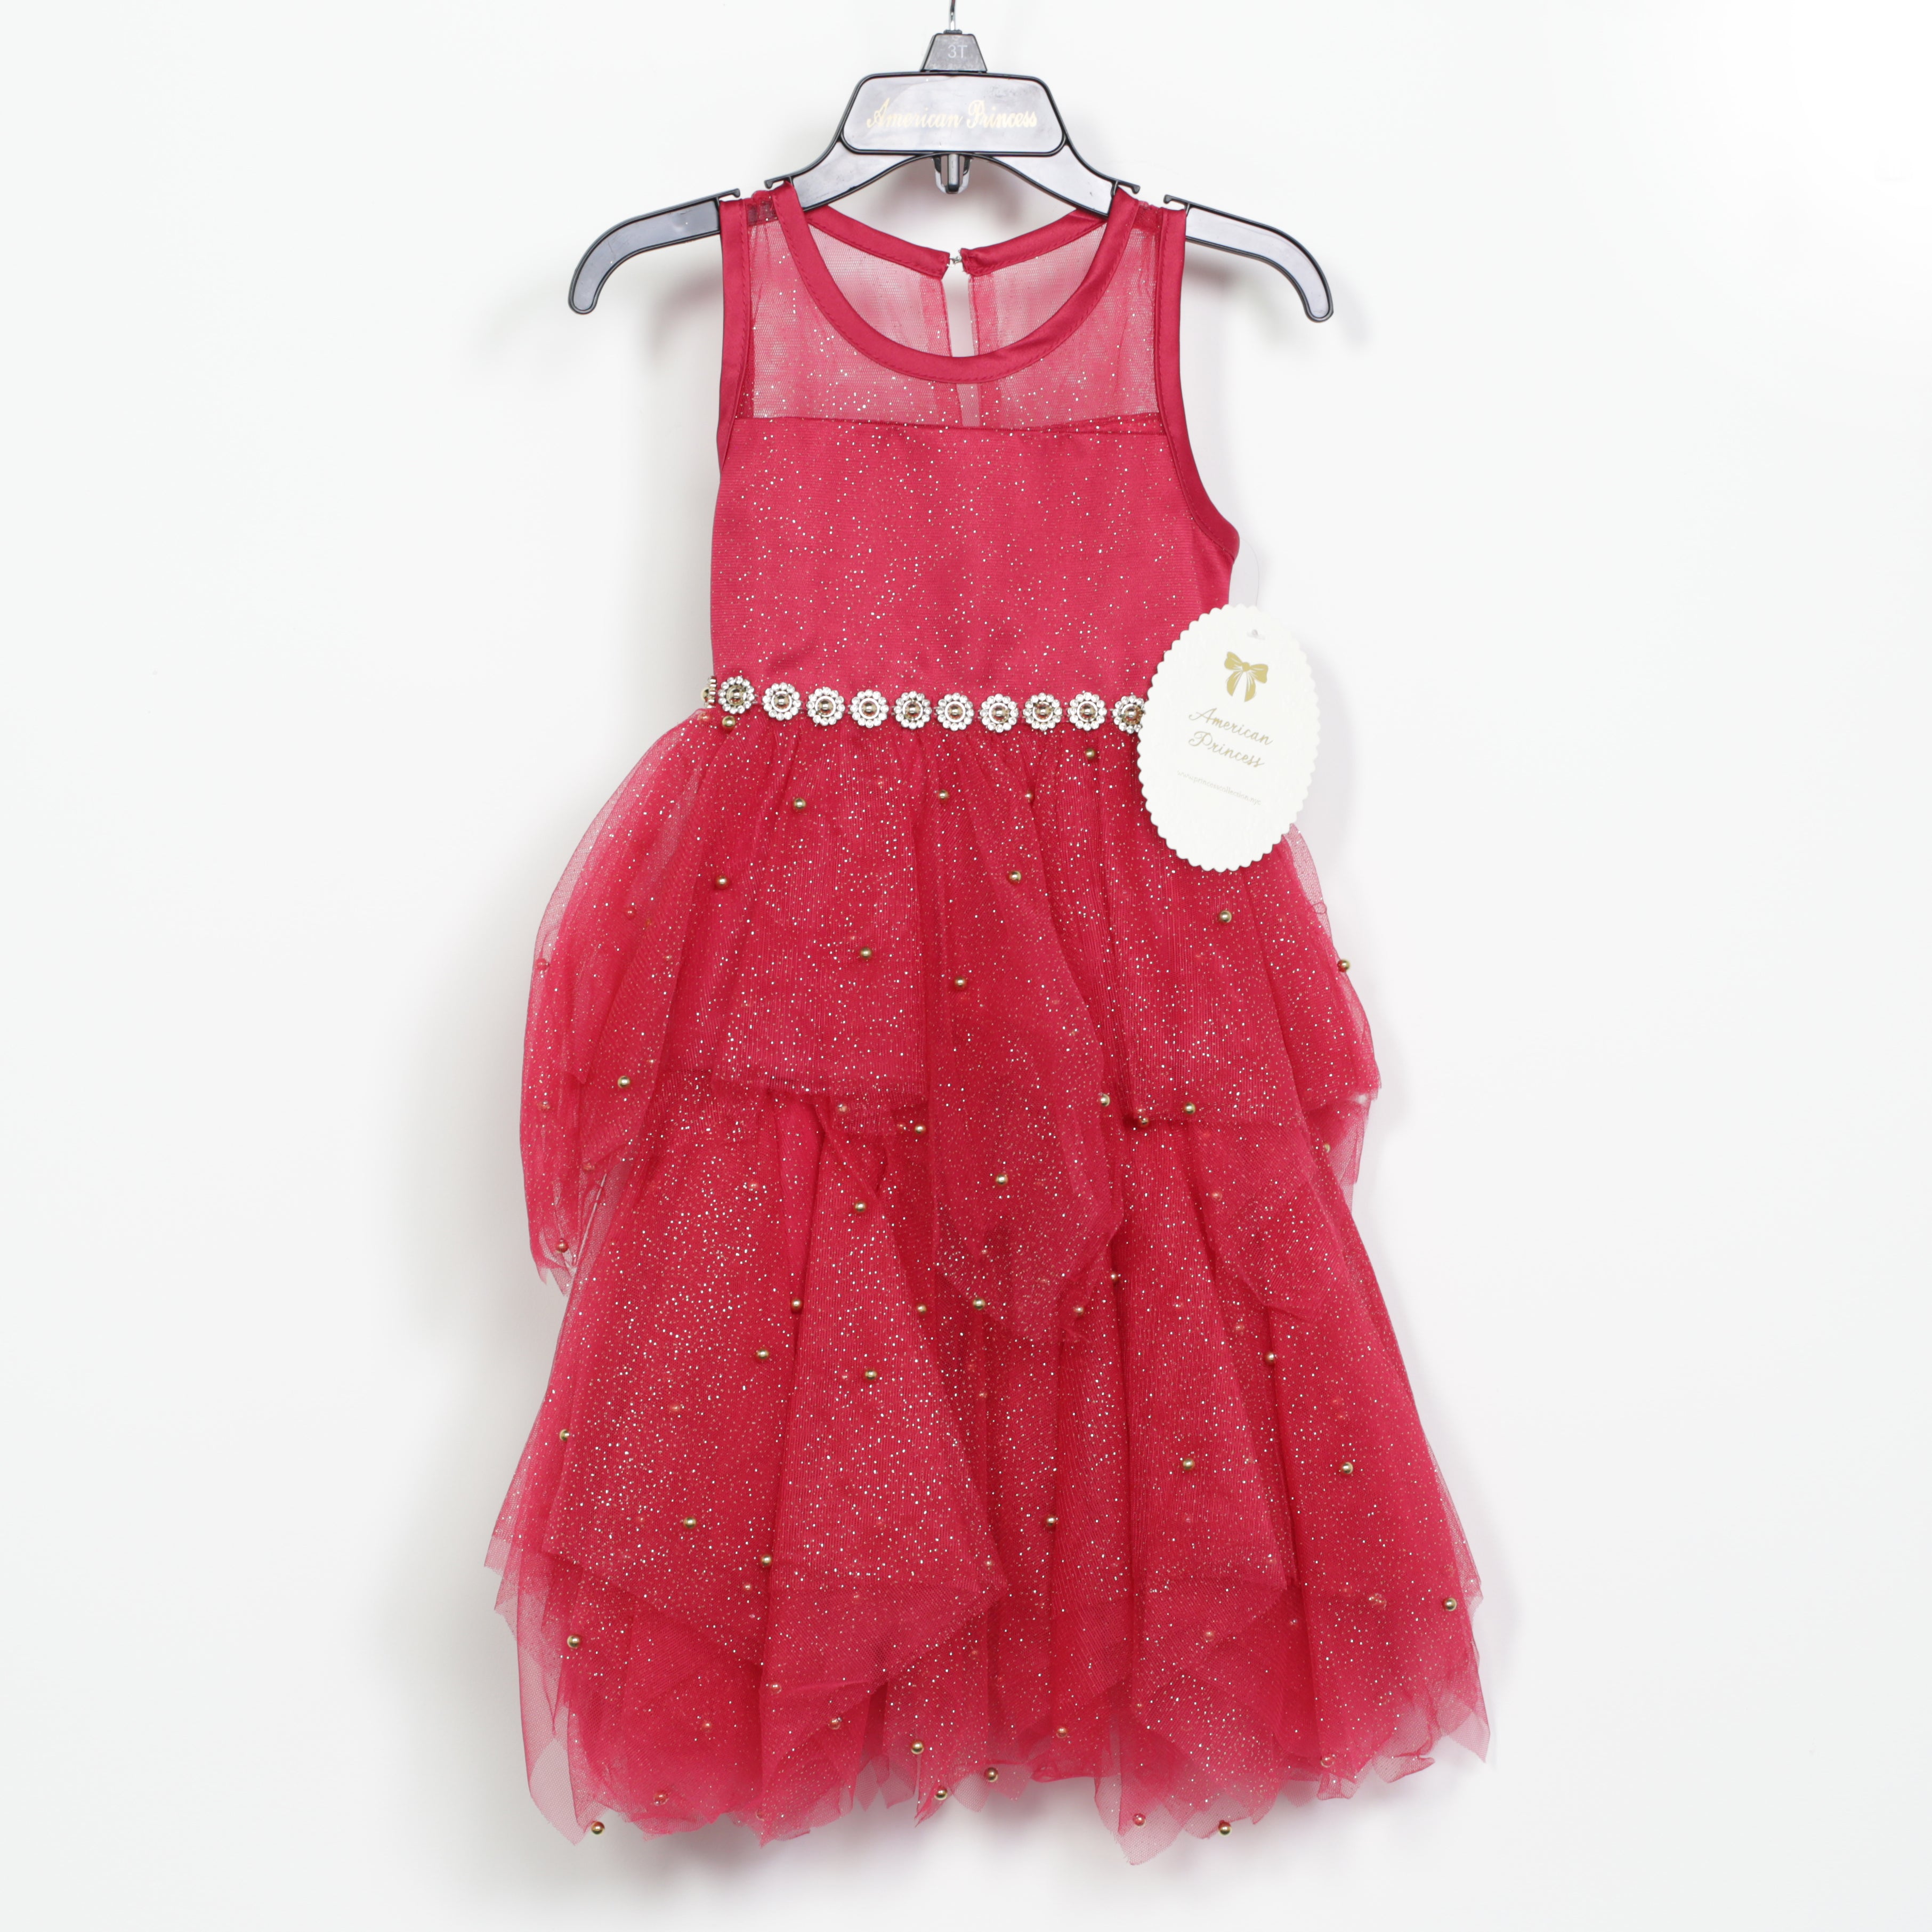 American Princess Red Dress - Gold Sparkles & Embellishments